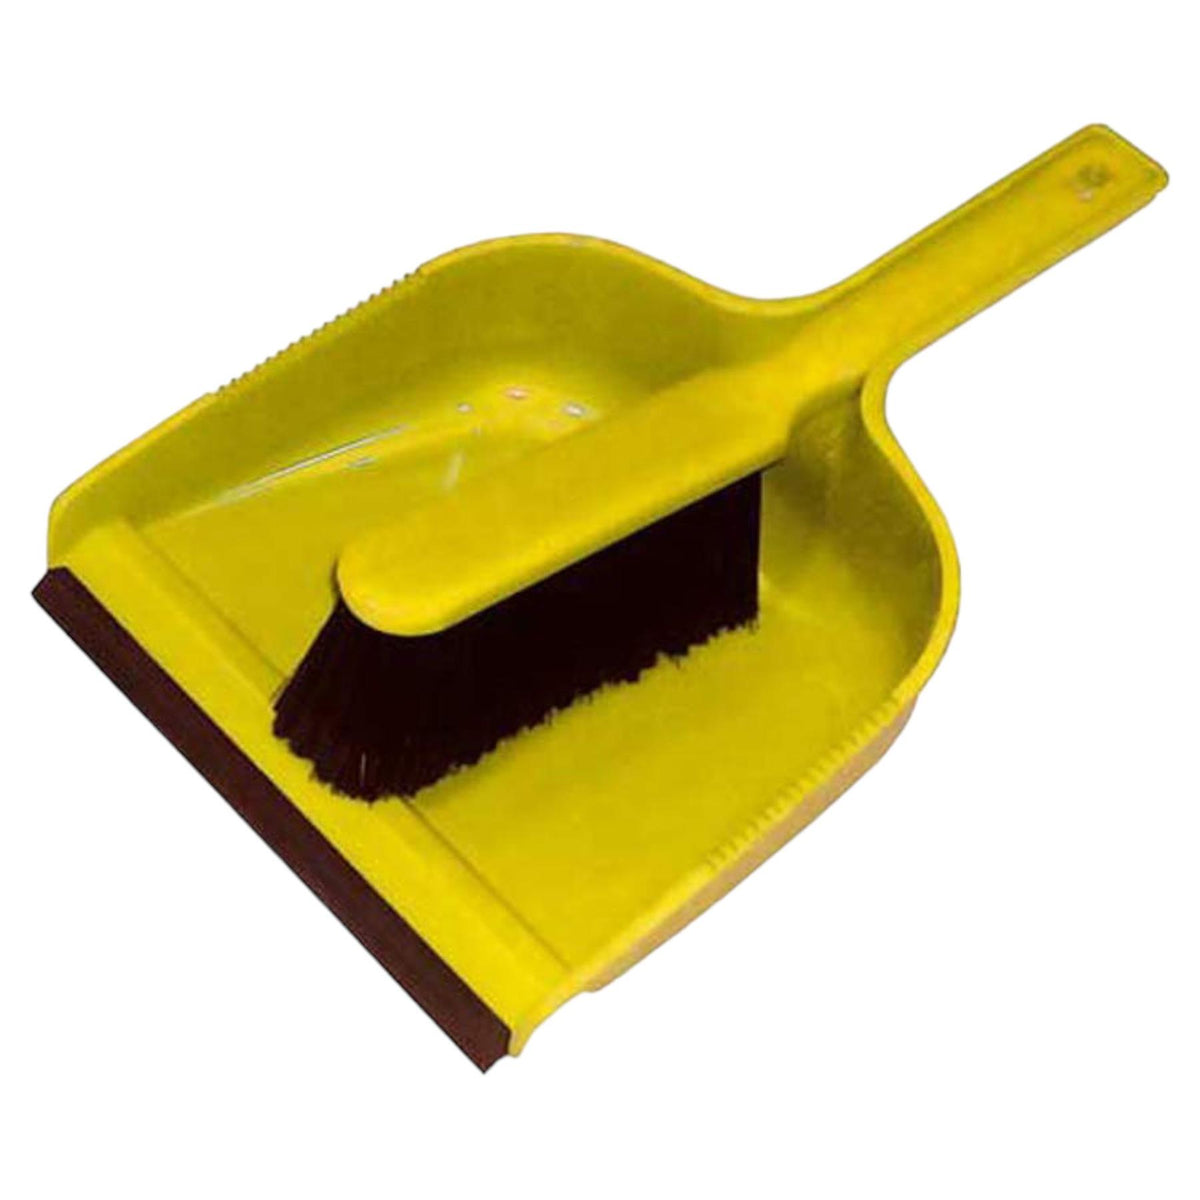 Ramon Hygiene Yellow Dust Pan and Brush Set, with Soft Bristles, Yellow